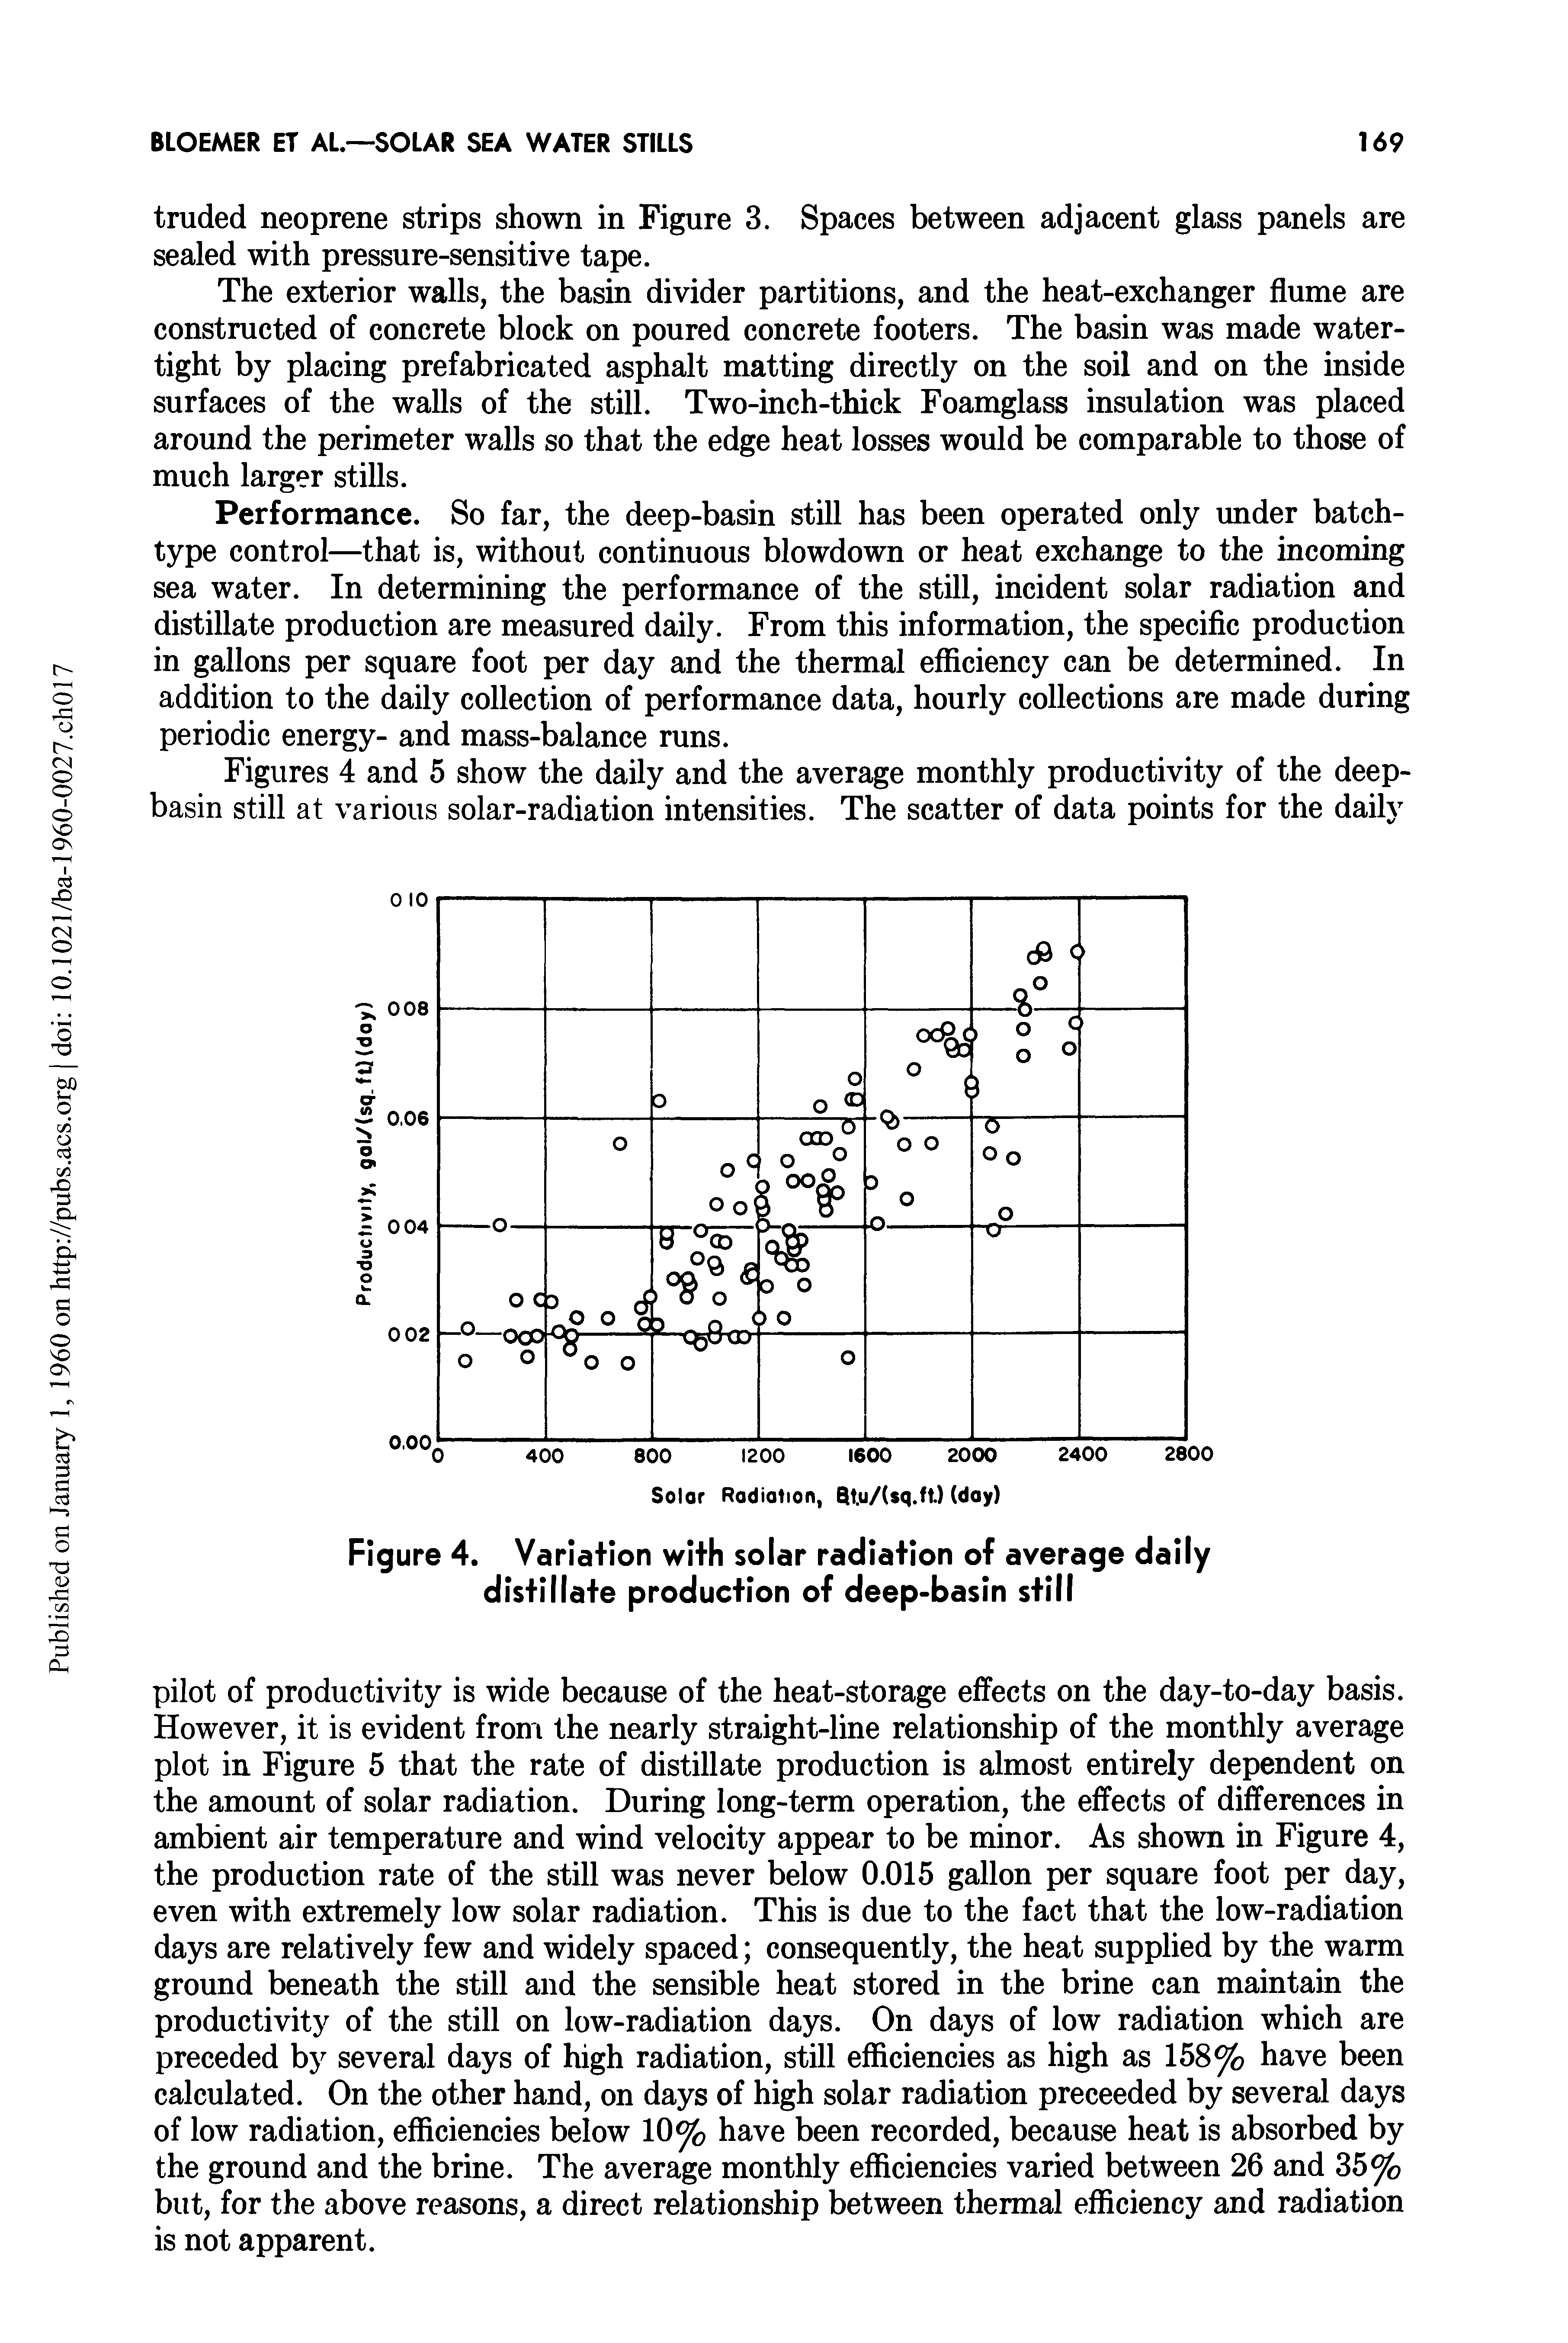 Figure 4. Variation with solar radiation of average daily distillate production of deep-basin still...